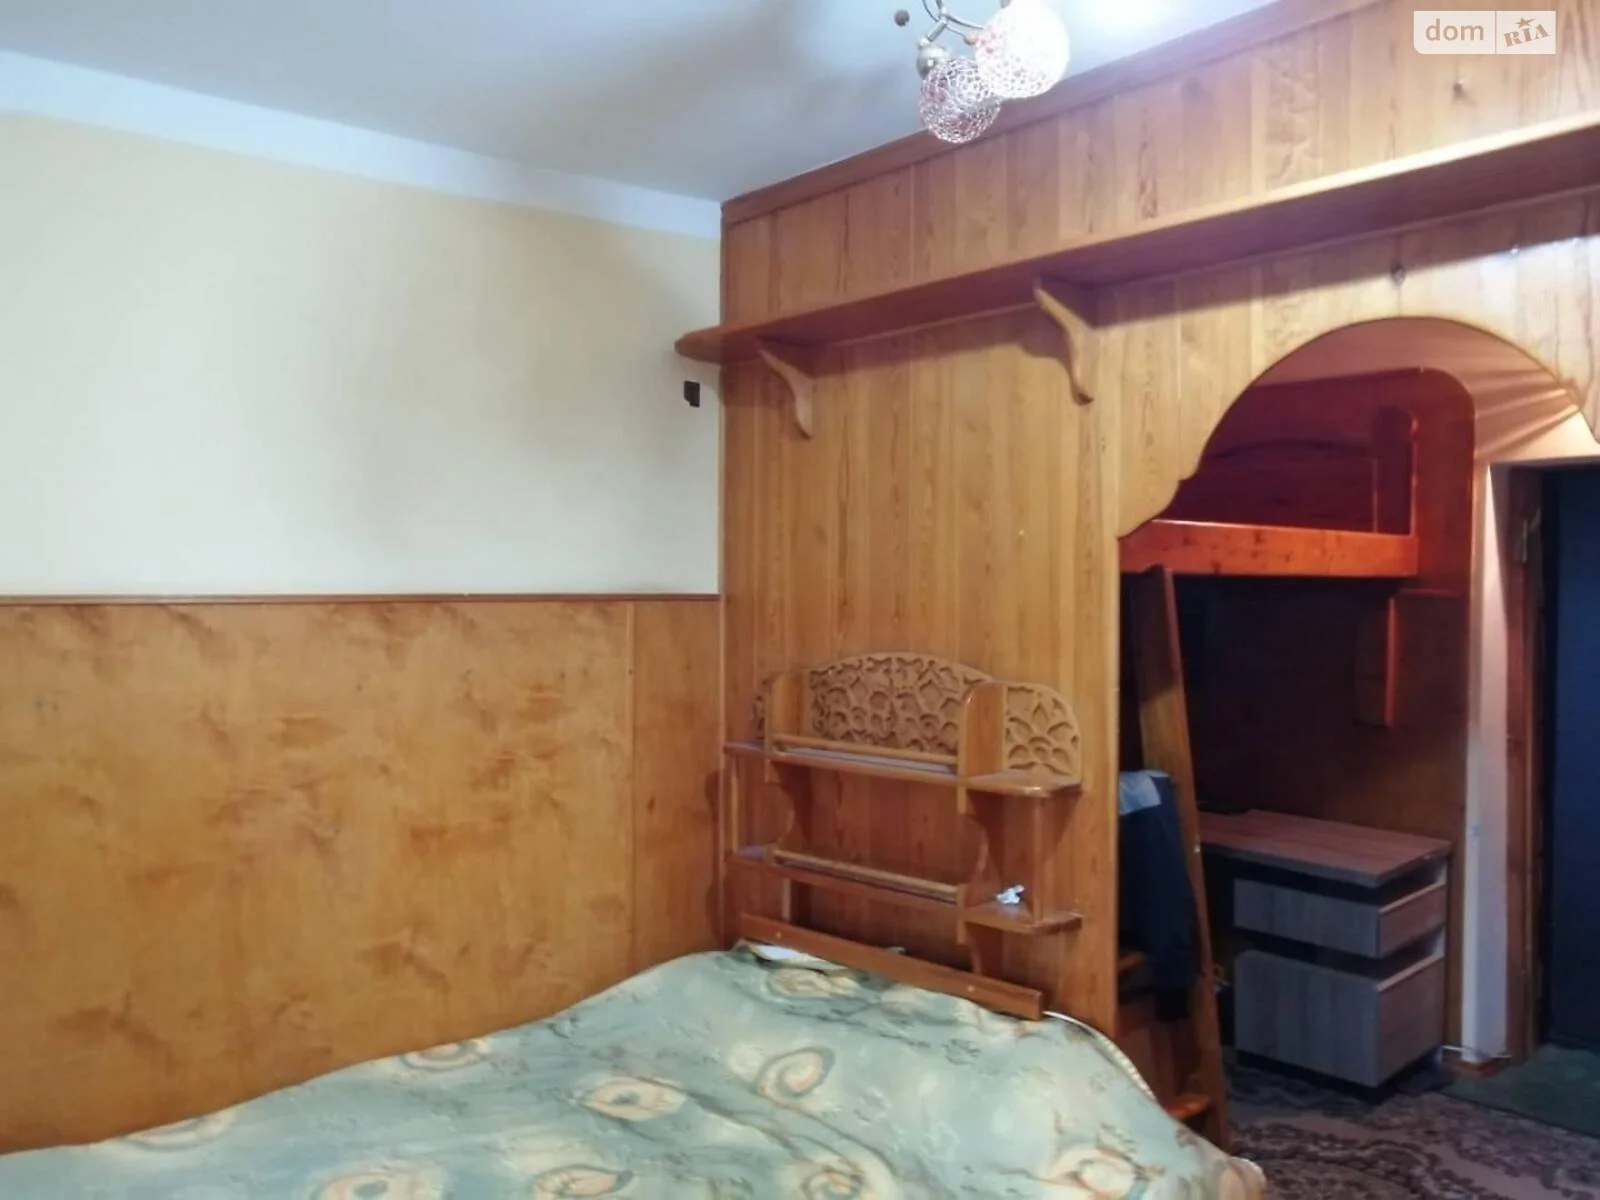 Продается комната 26.3 кв. м в Черноморске, цена: 15000 $ - фото 1